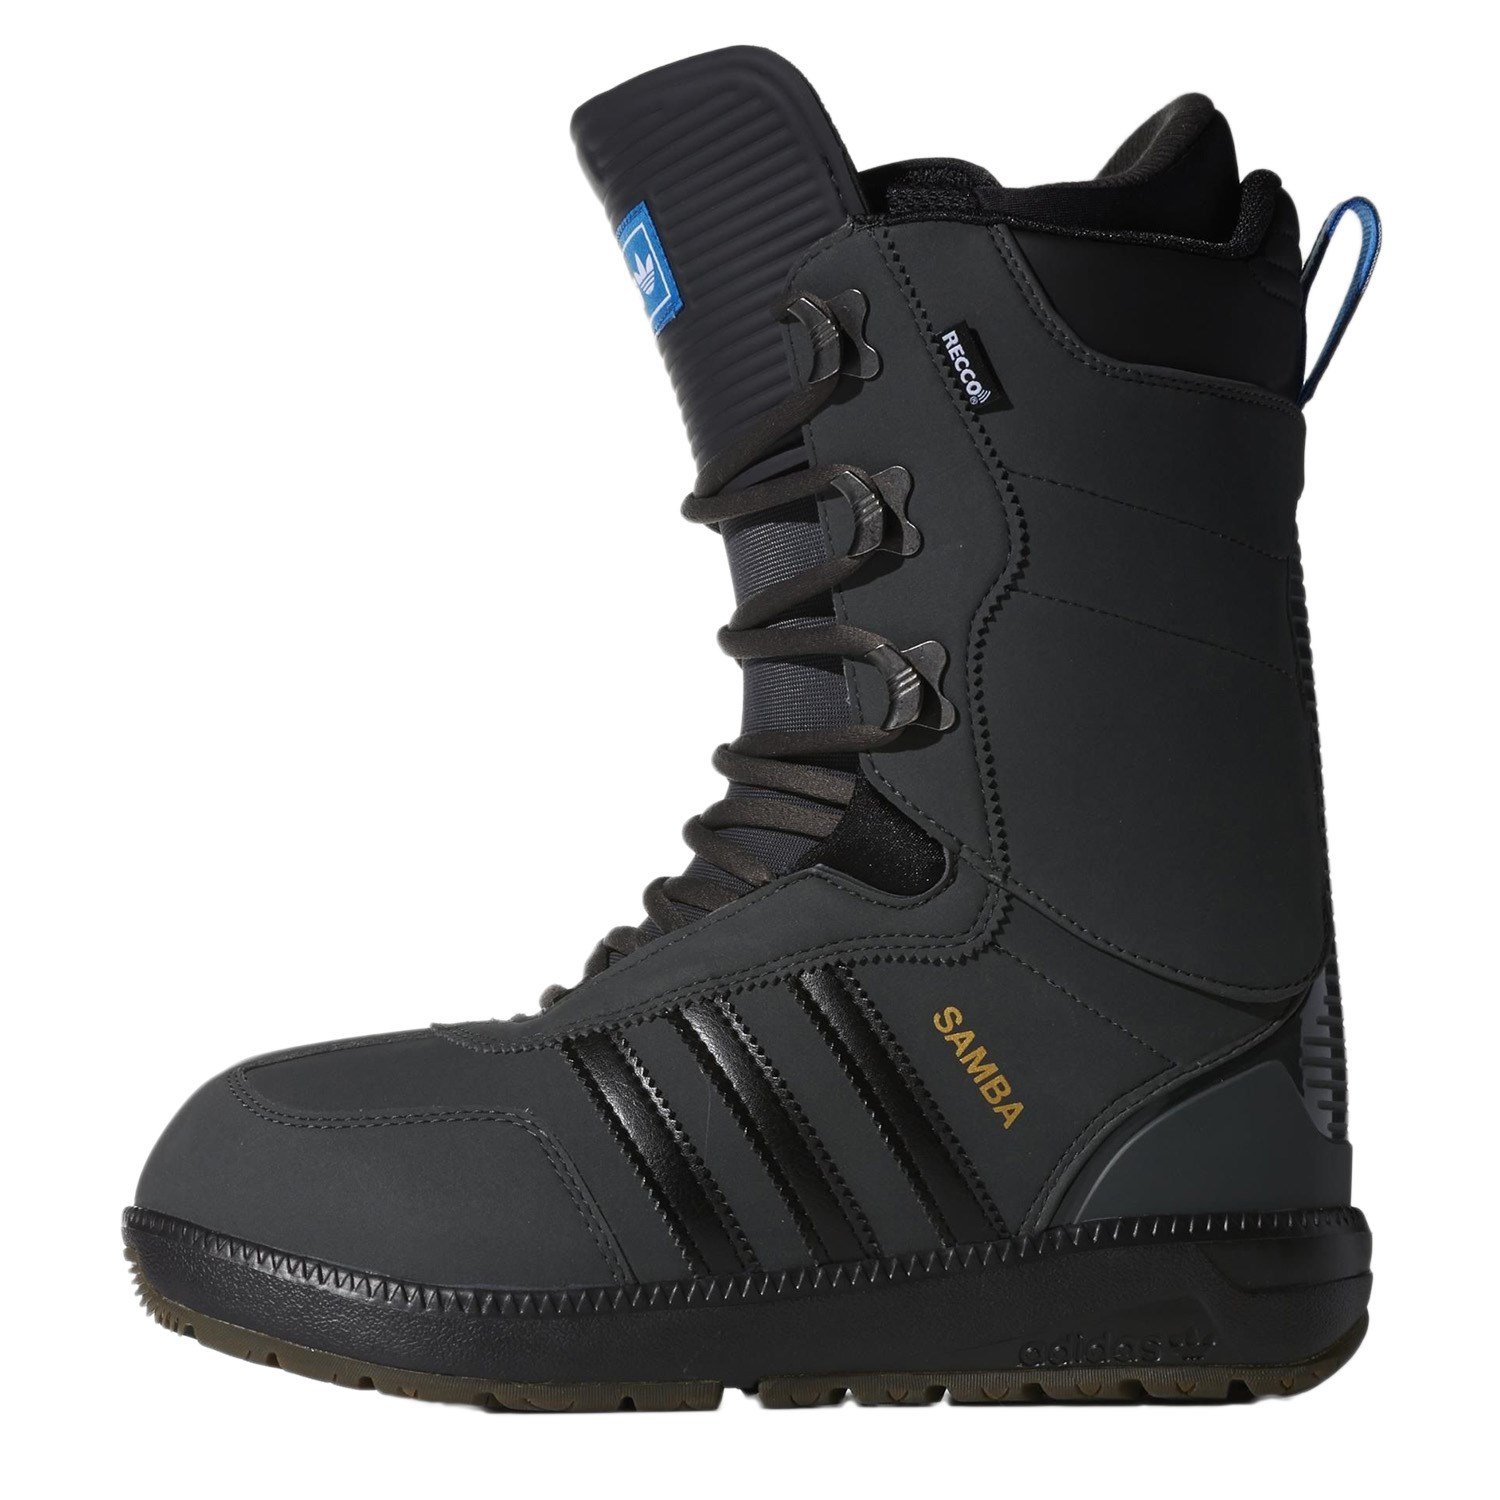 motto As minimum Adidas Samba Snowboard Boots 2015 | evo